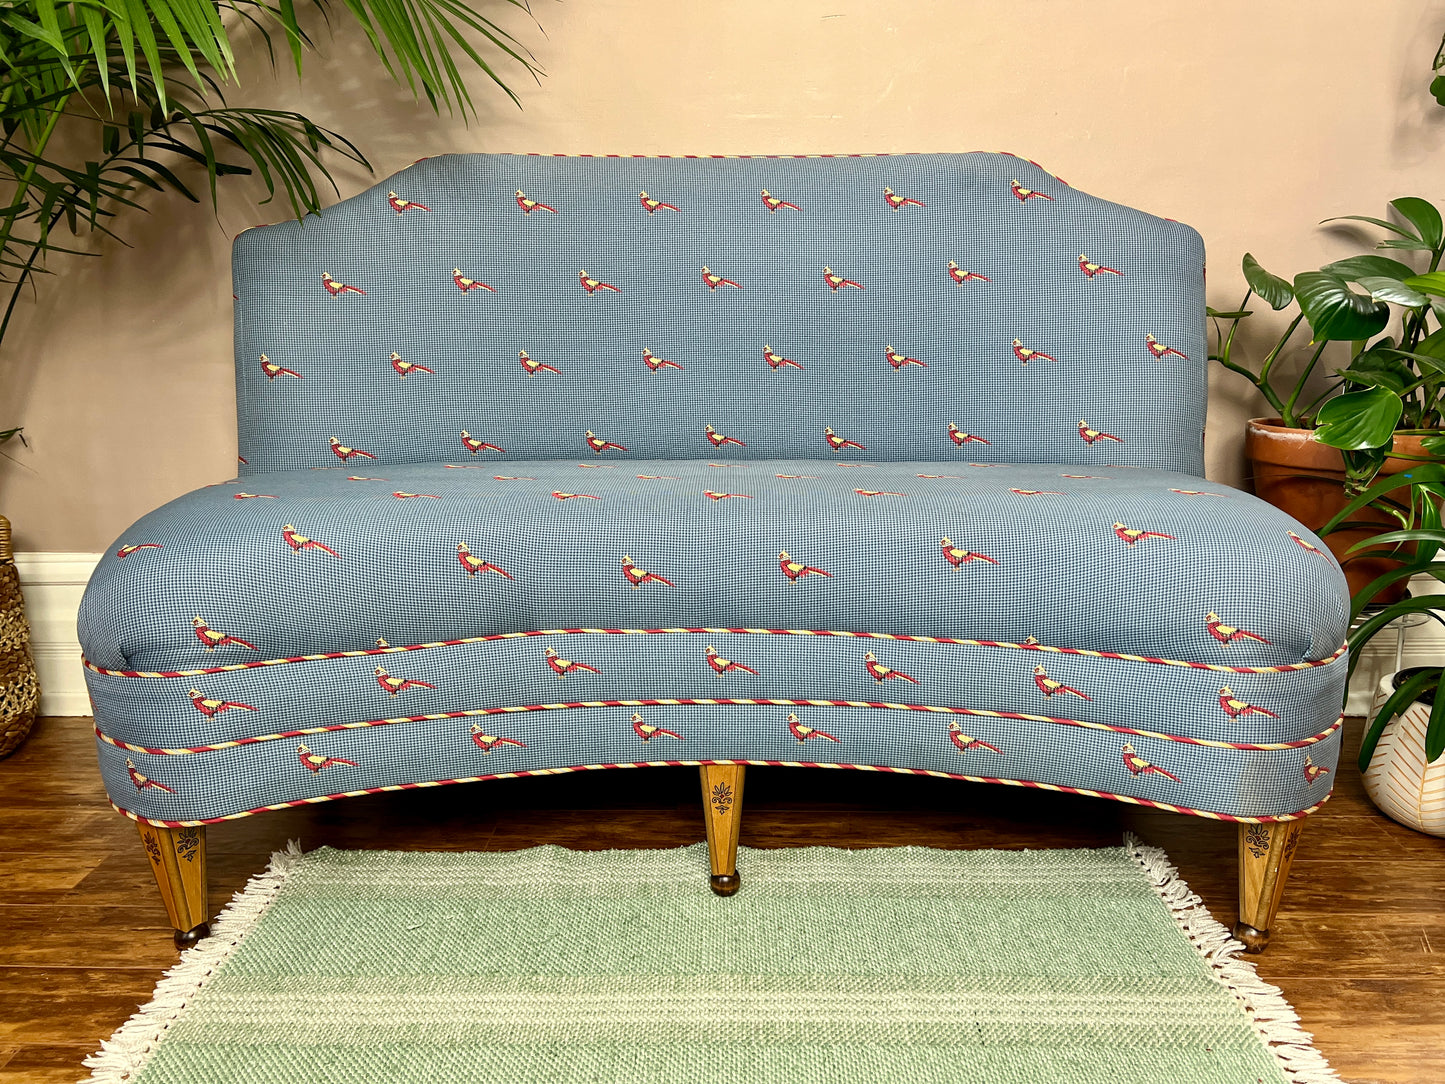 The Red Pheasant Sofa